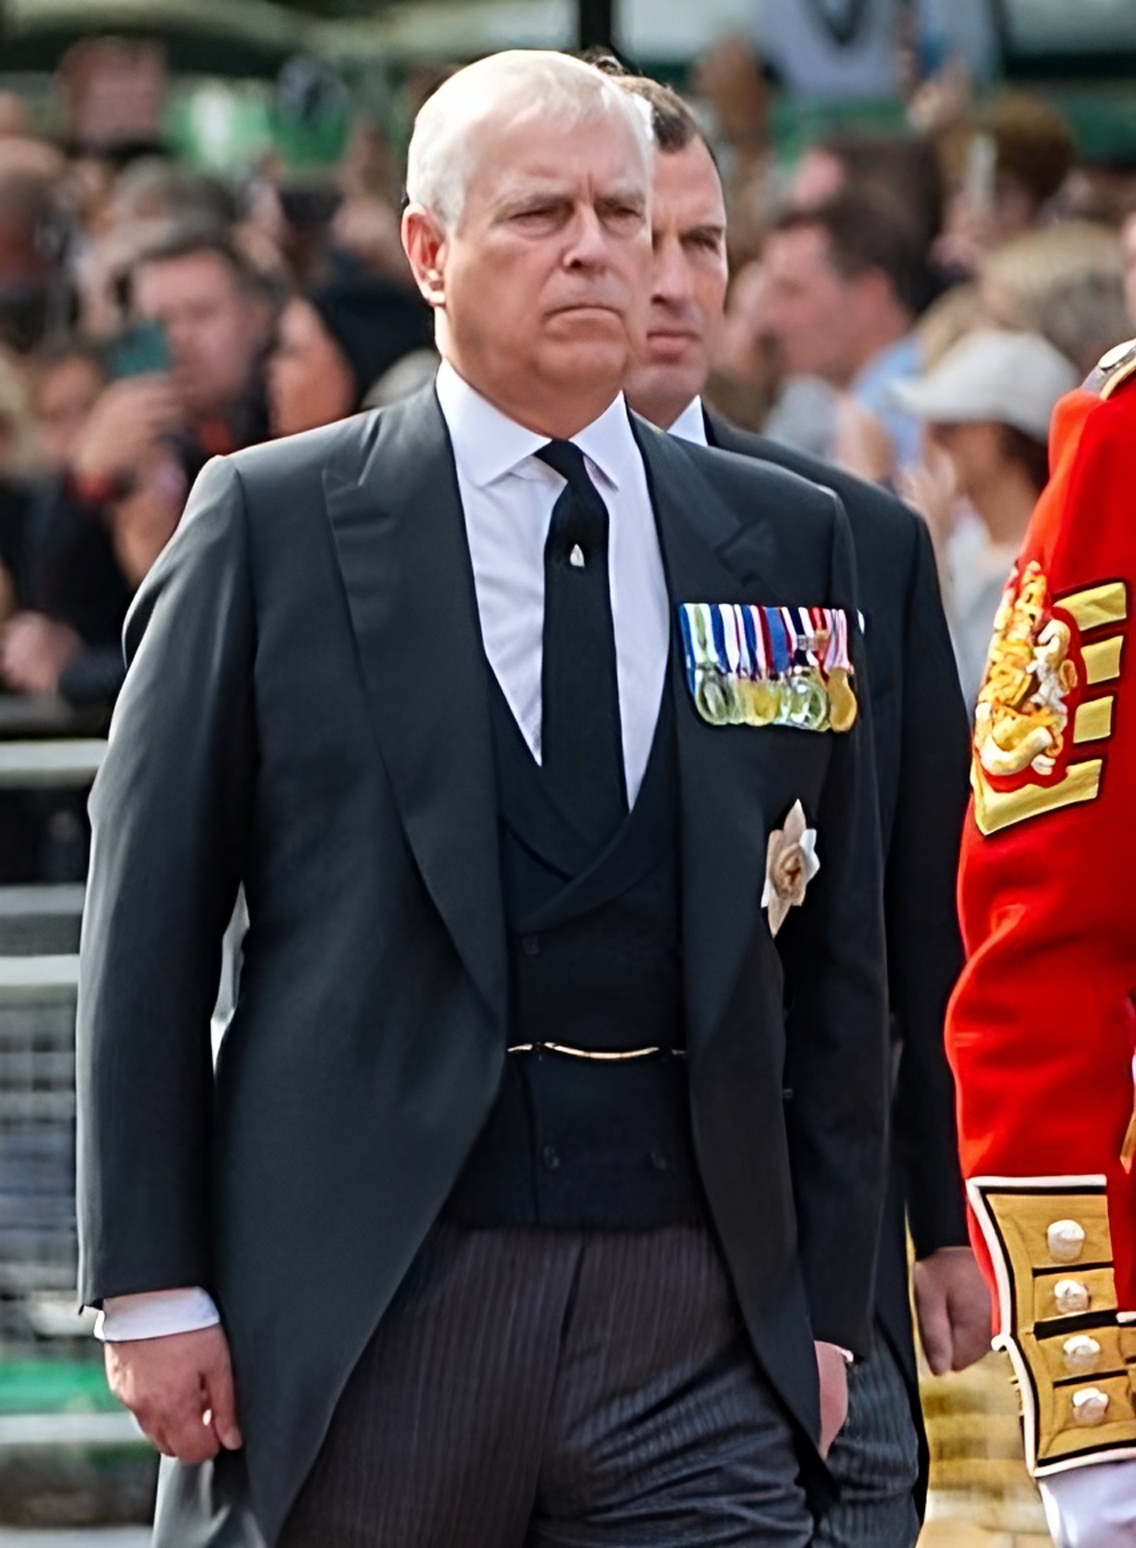 Prince Andrew, Duke of York photo pic